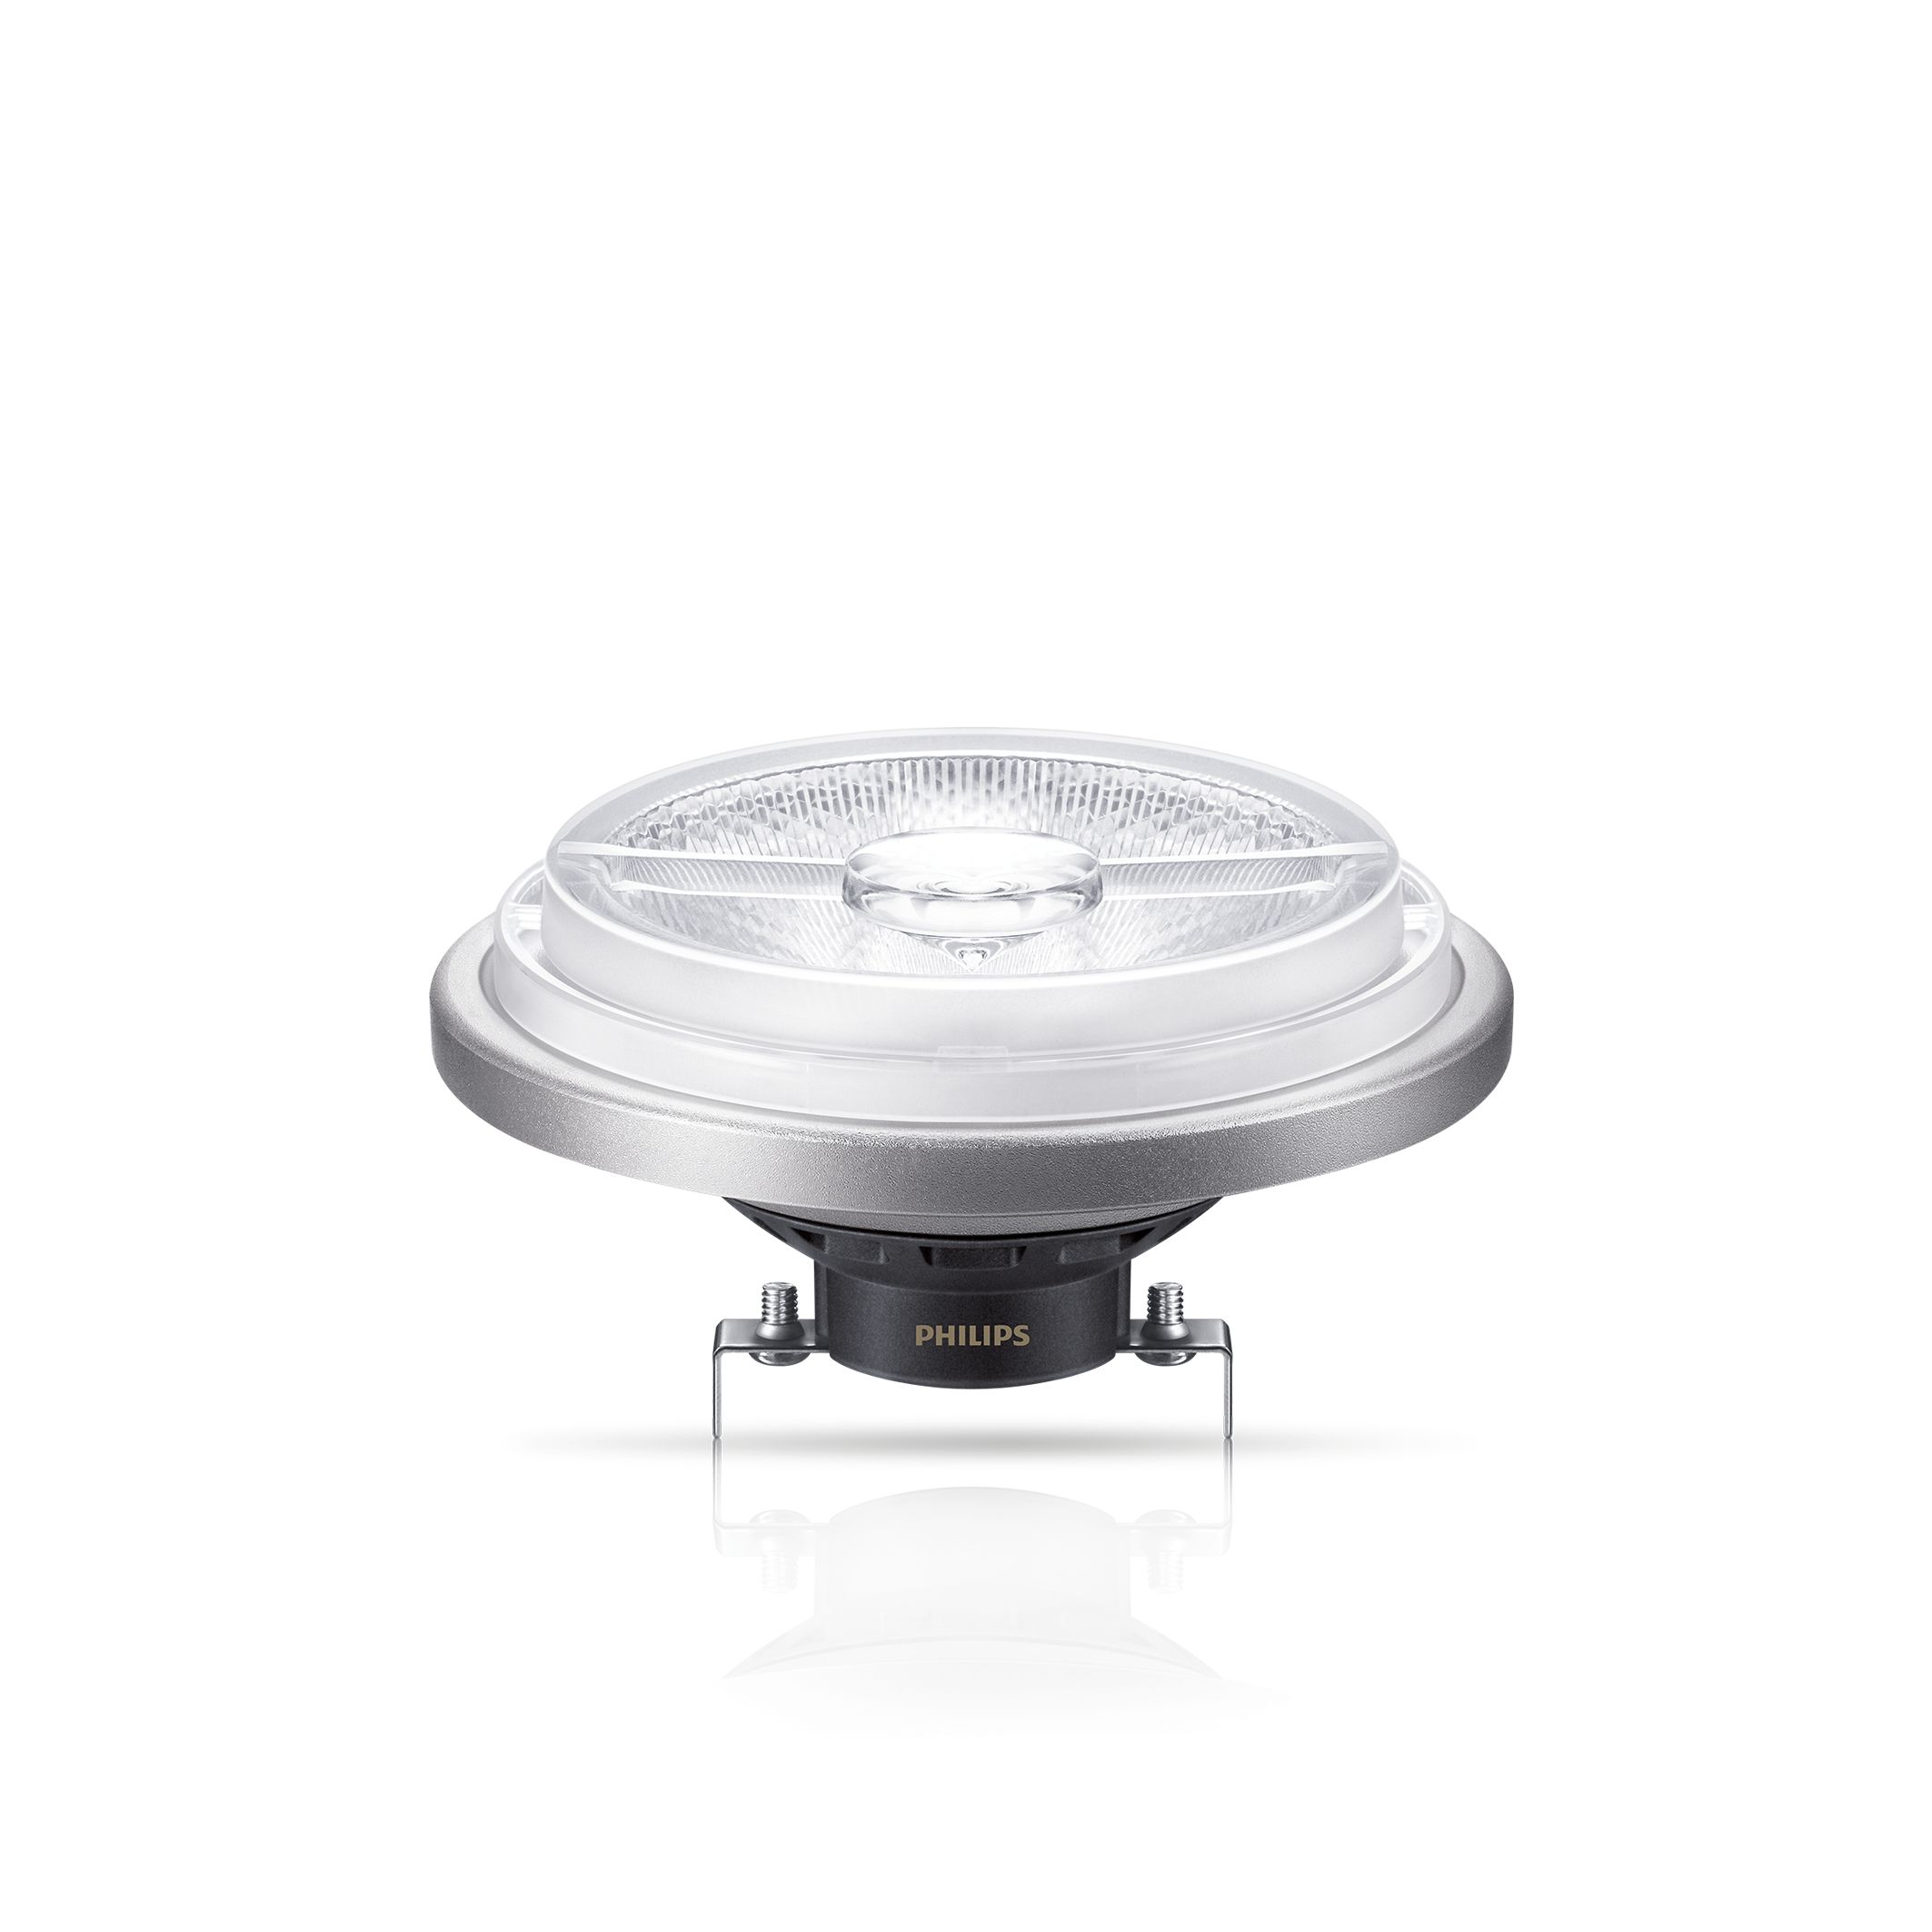 Lampe LED AR111 - Haled - MS3G